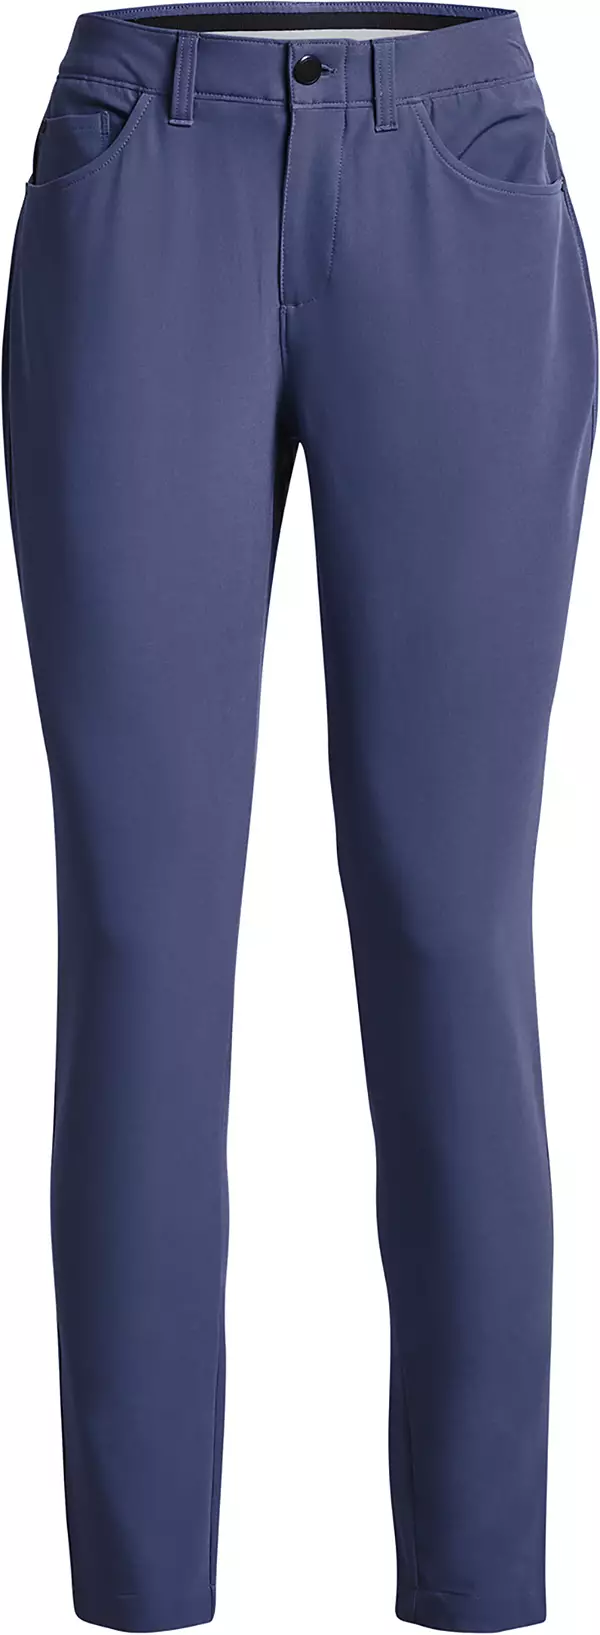 Under Armour Women's Links ColdGear® Infrared 5-Pocket Pants